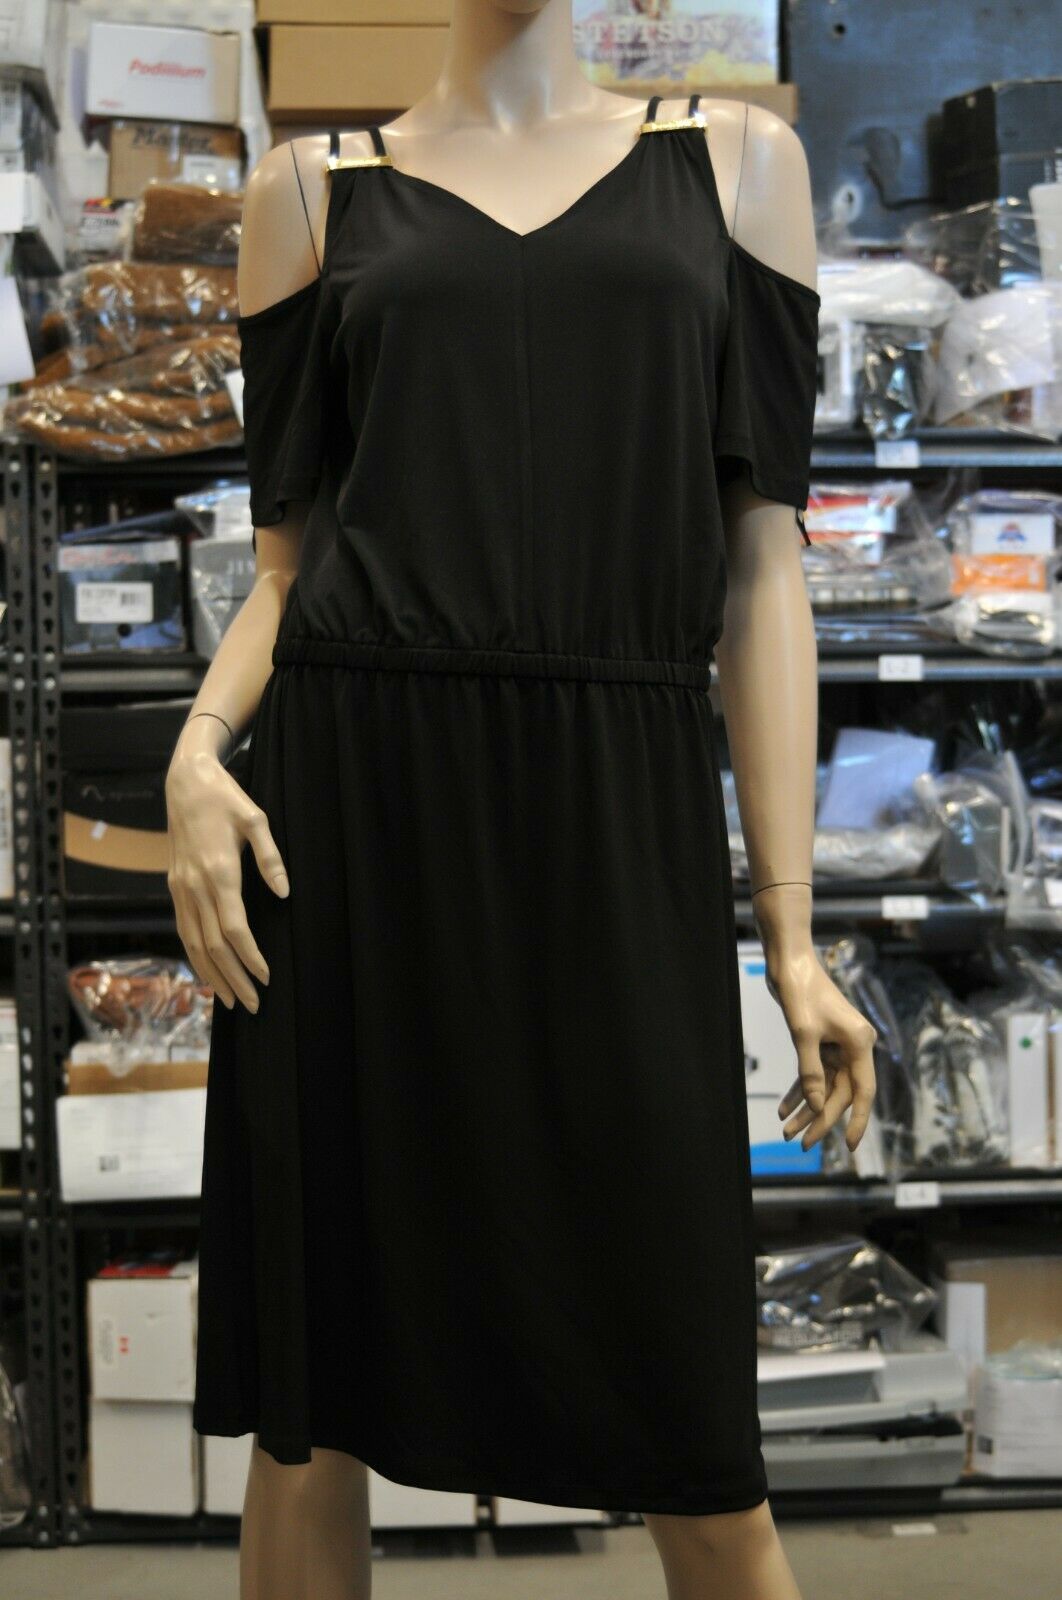 michael kors basics black dress